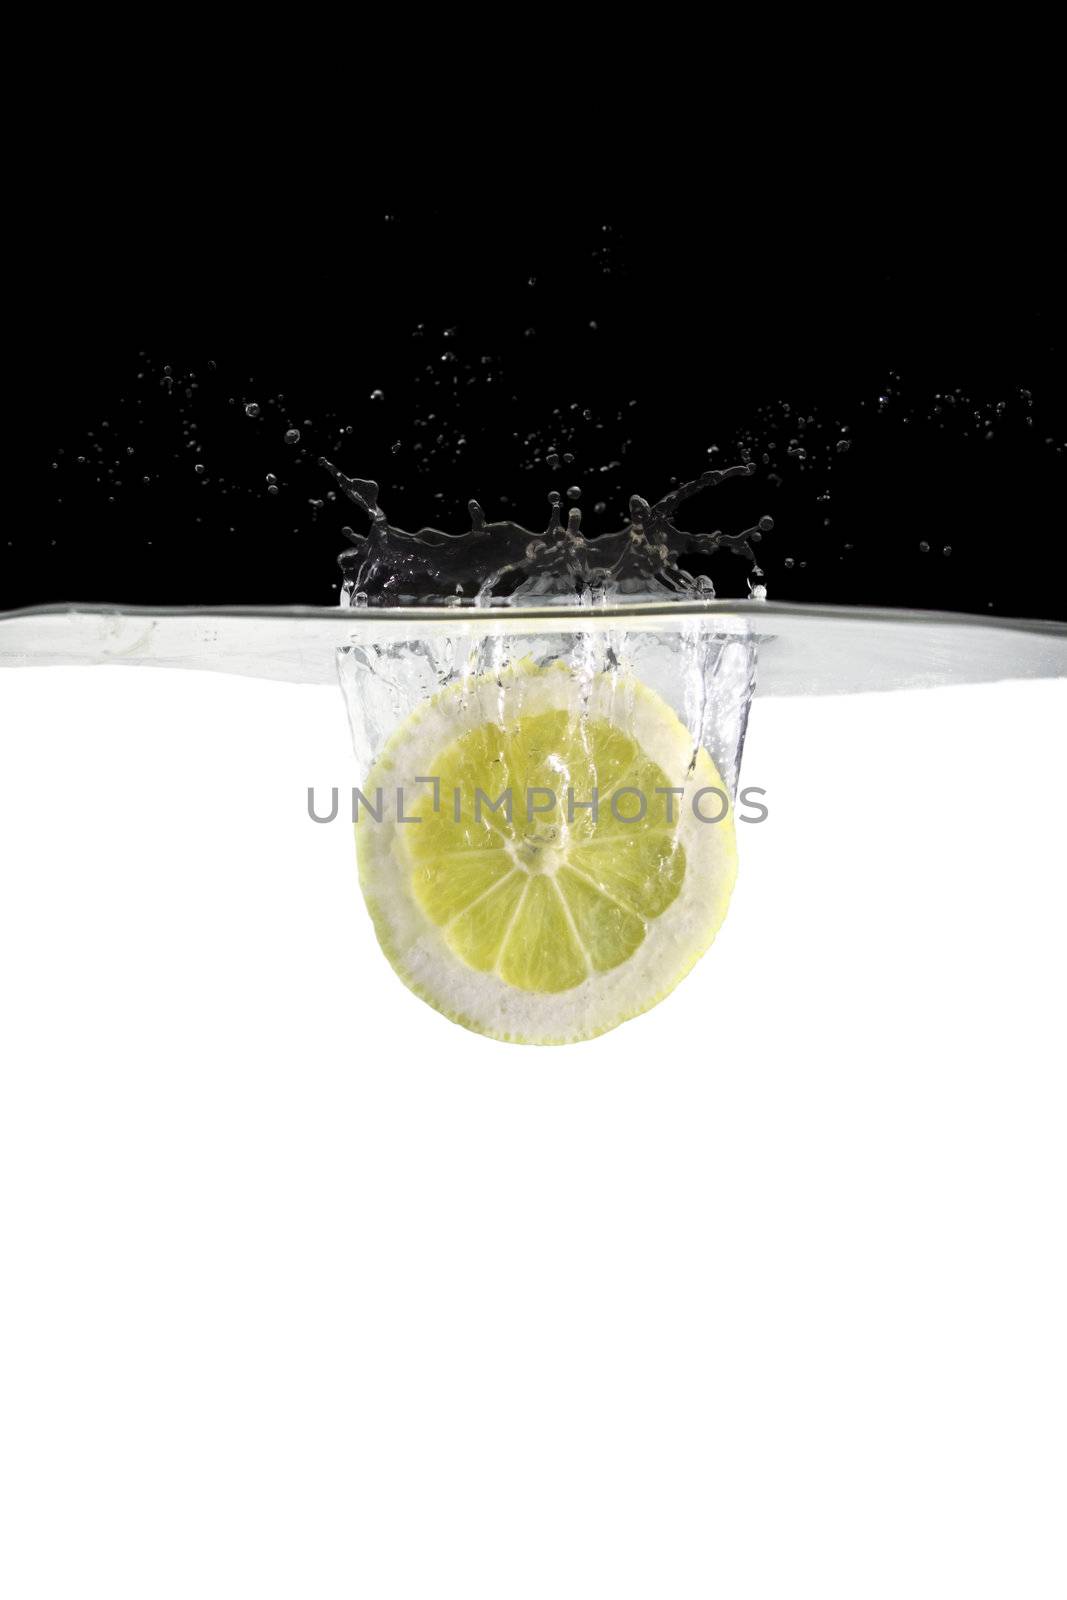 lemon slice in water 2 by RobStark